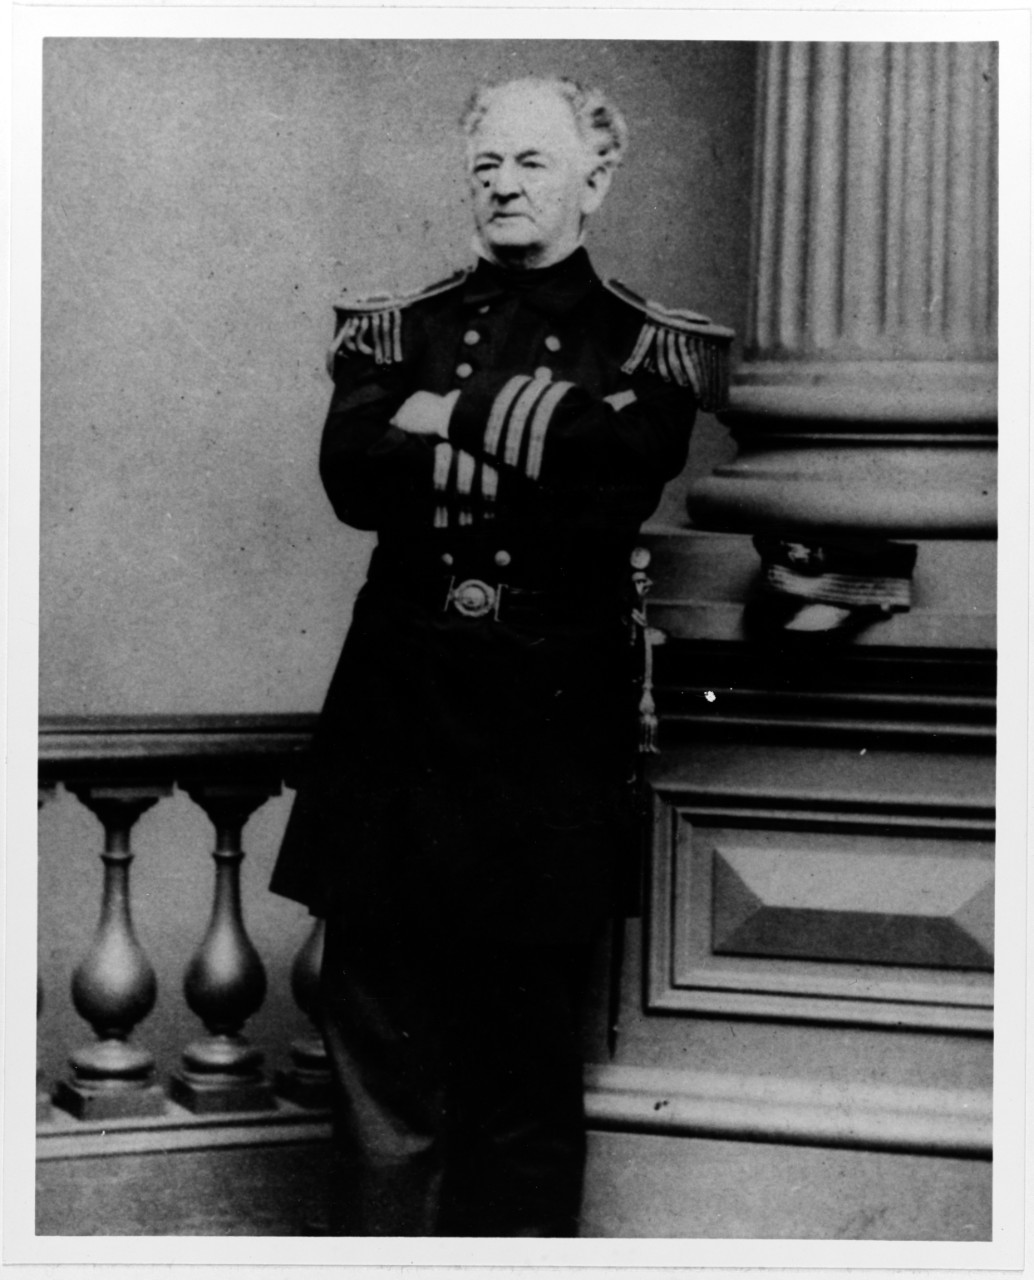 Captain William L. Hudson, USN